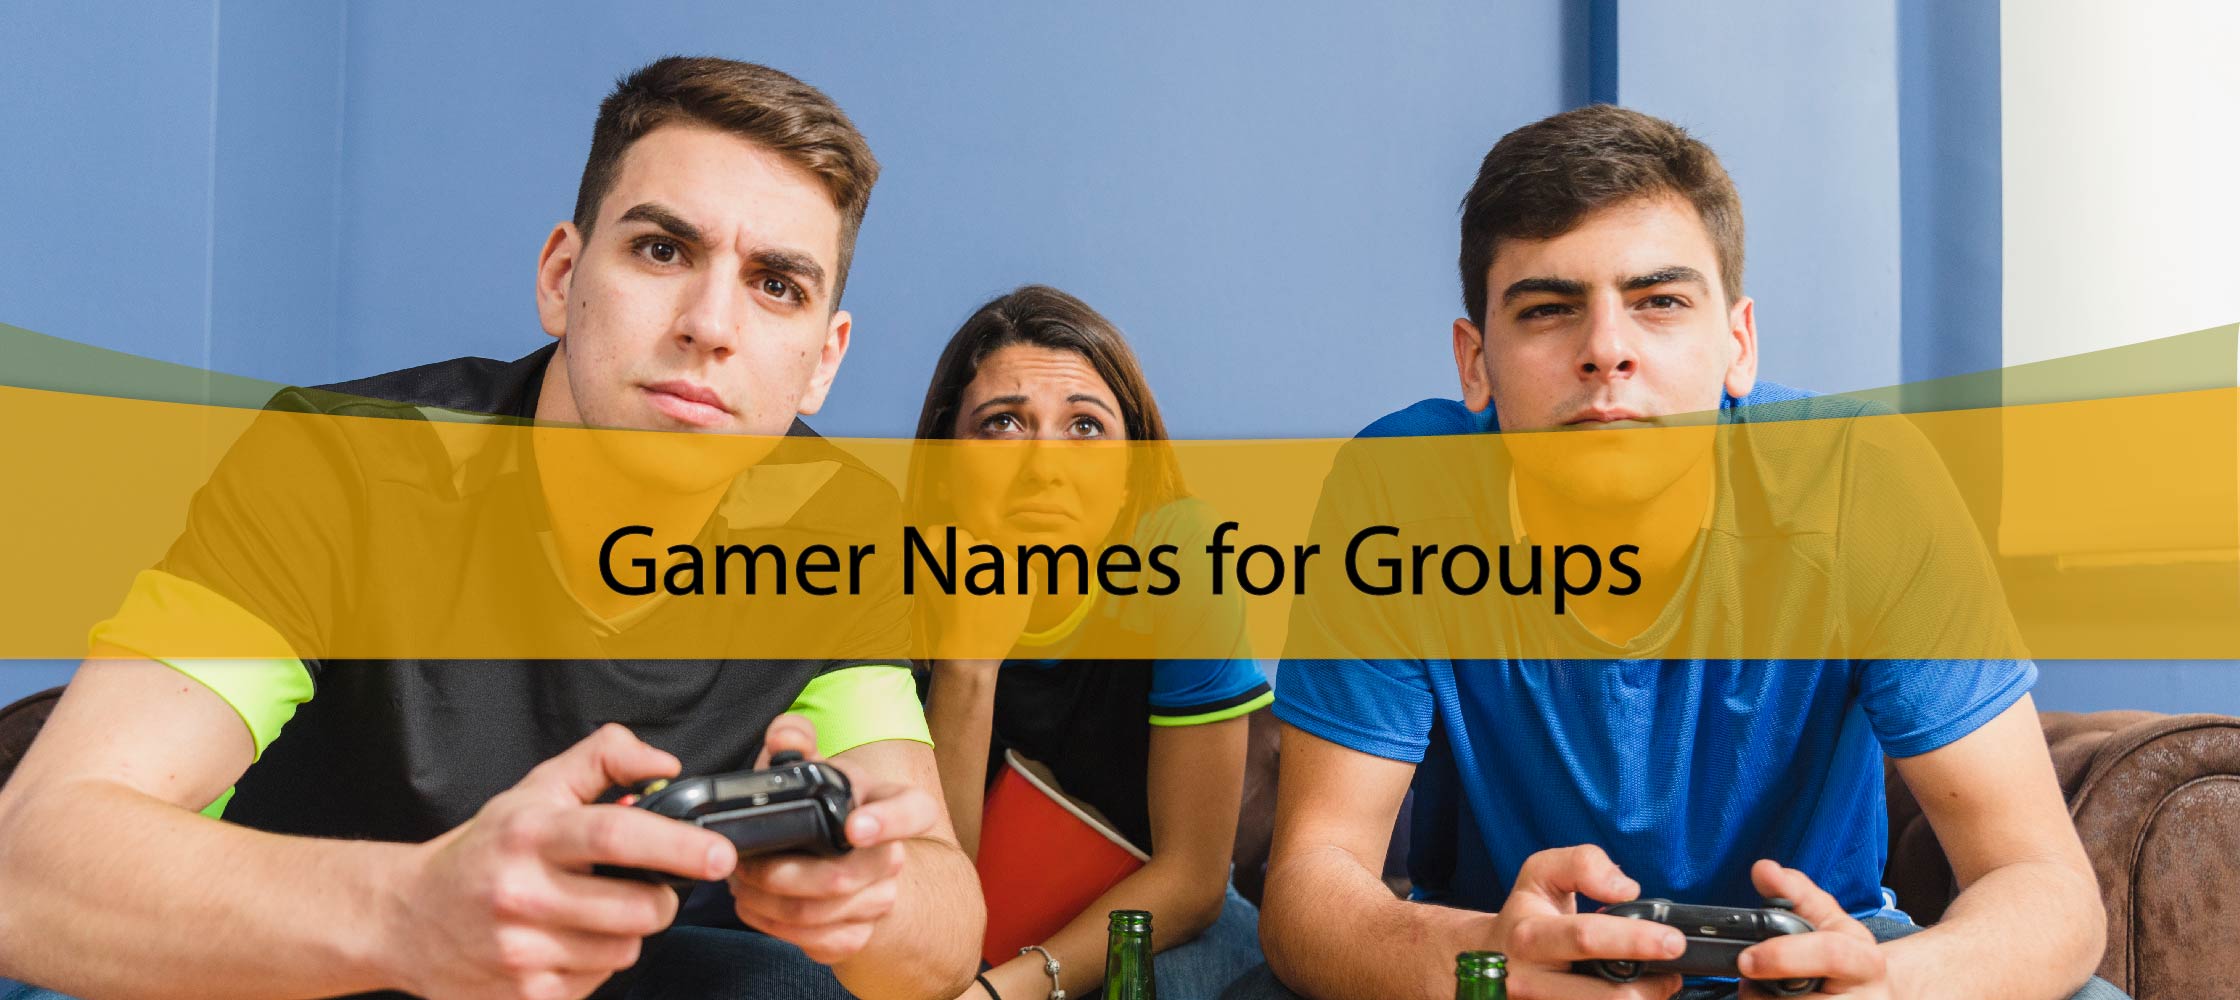 Gamer Names for Groups